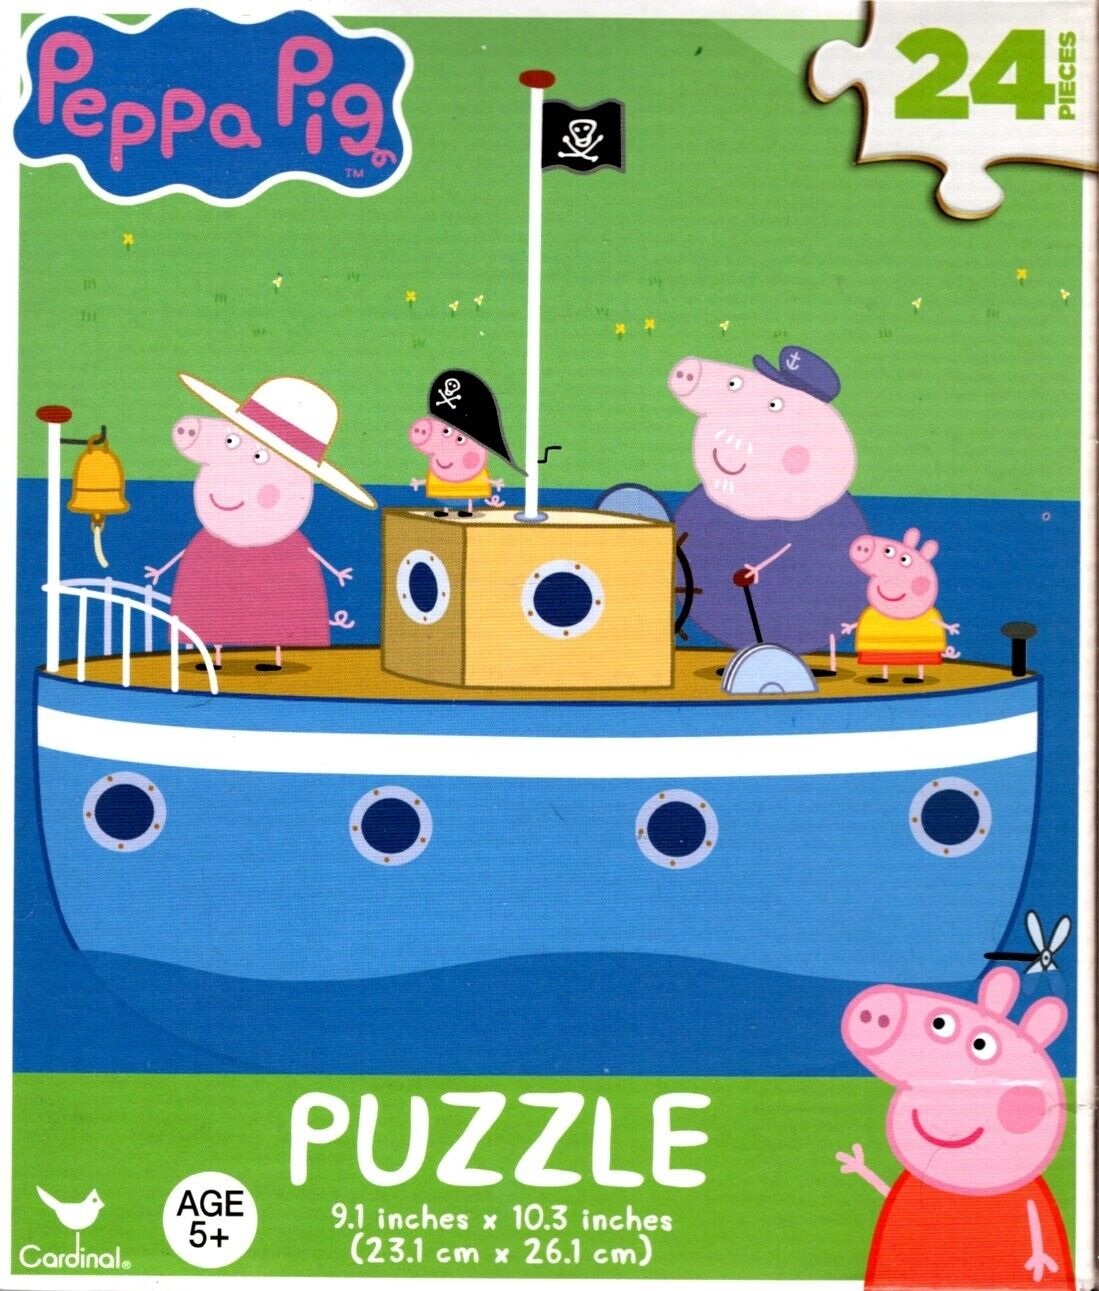 Peppa Pig - 24 Piece Jigsaw Puzzle v6